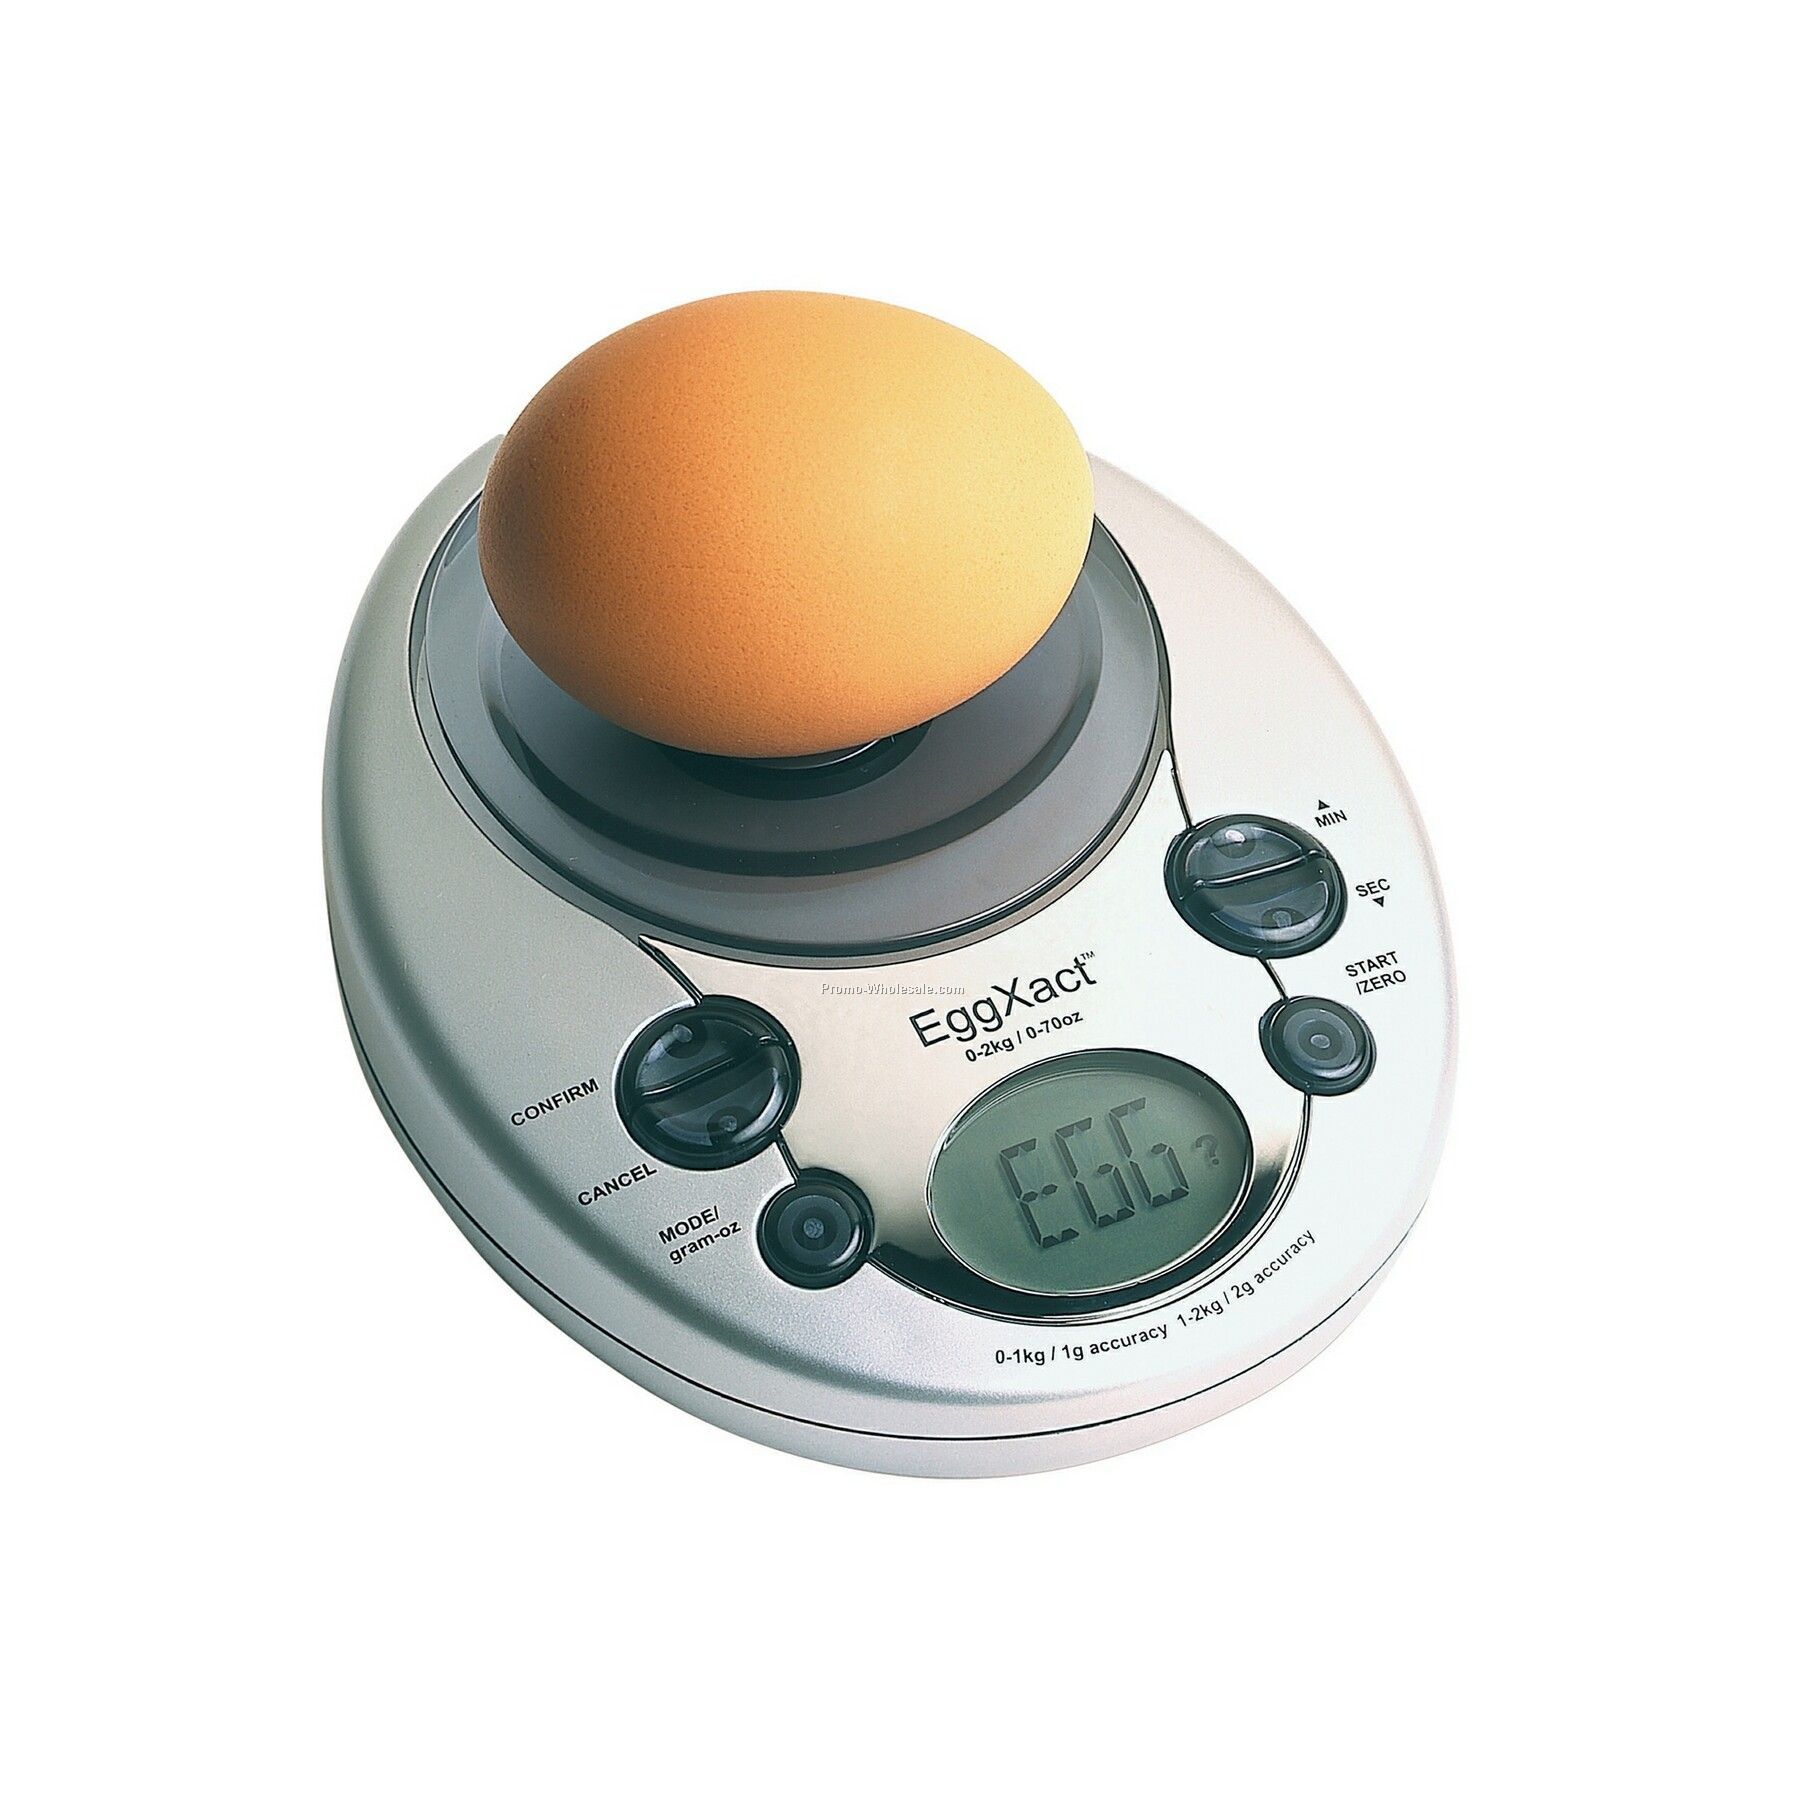 http://www.promo-wholesale.com/Upfiles/Prod_p/Egg-xact-Kitchen-Scale_20090816028.jpg